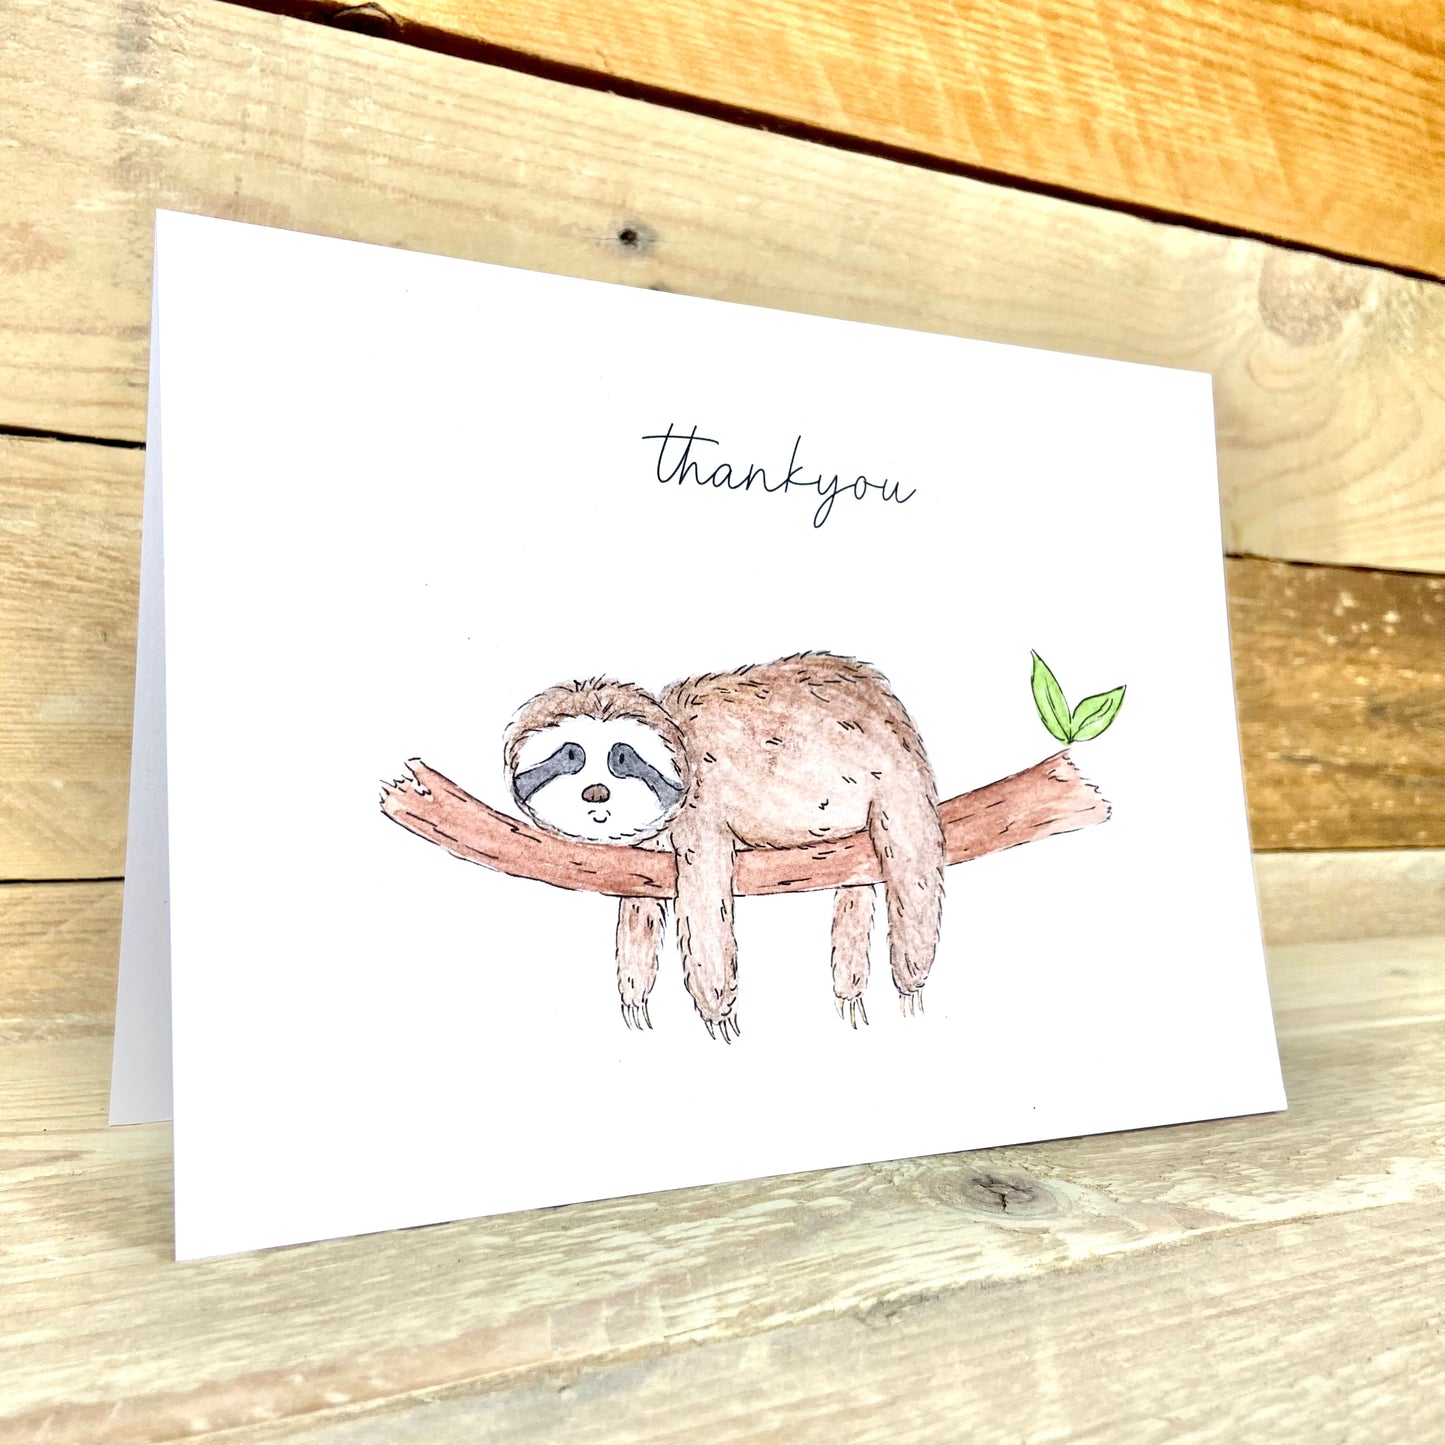 Hugh the Hanging Sloth Thankyou Card